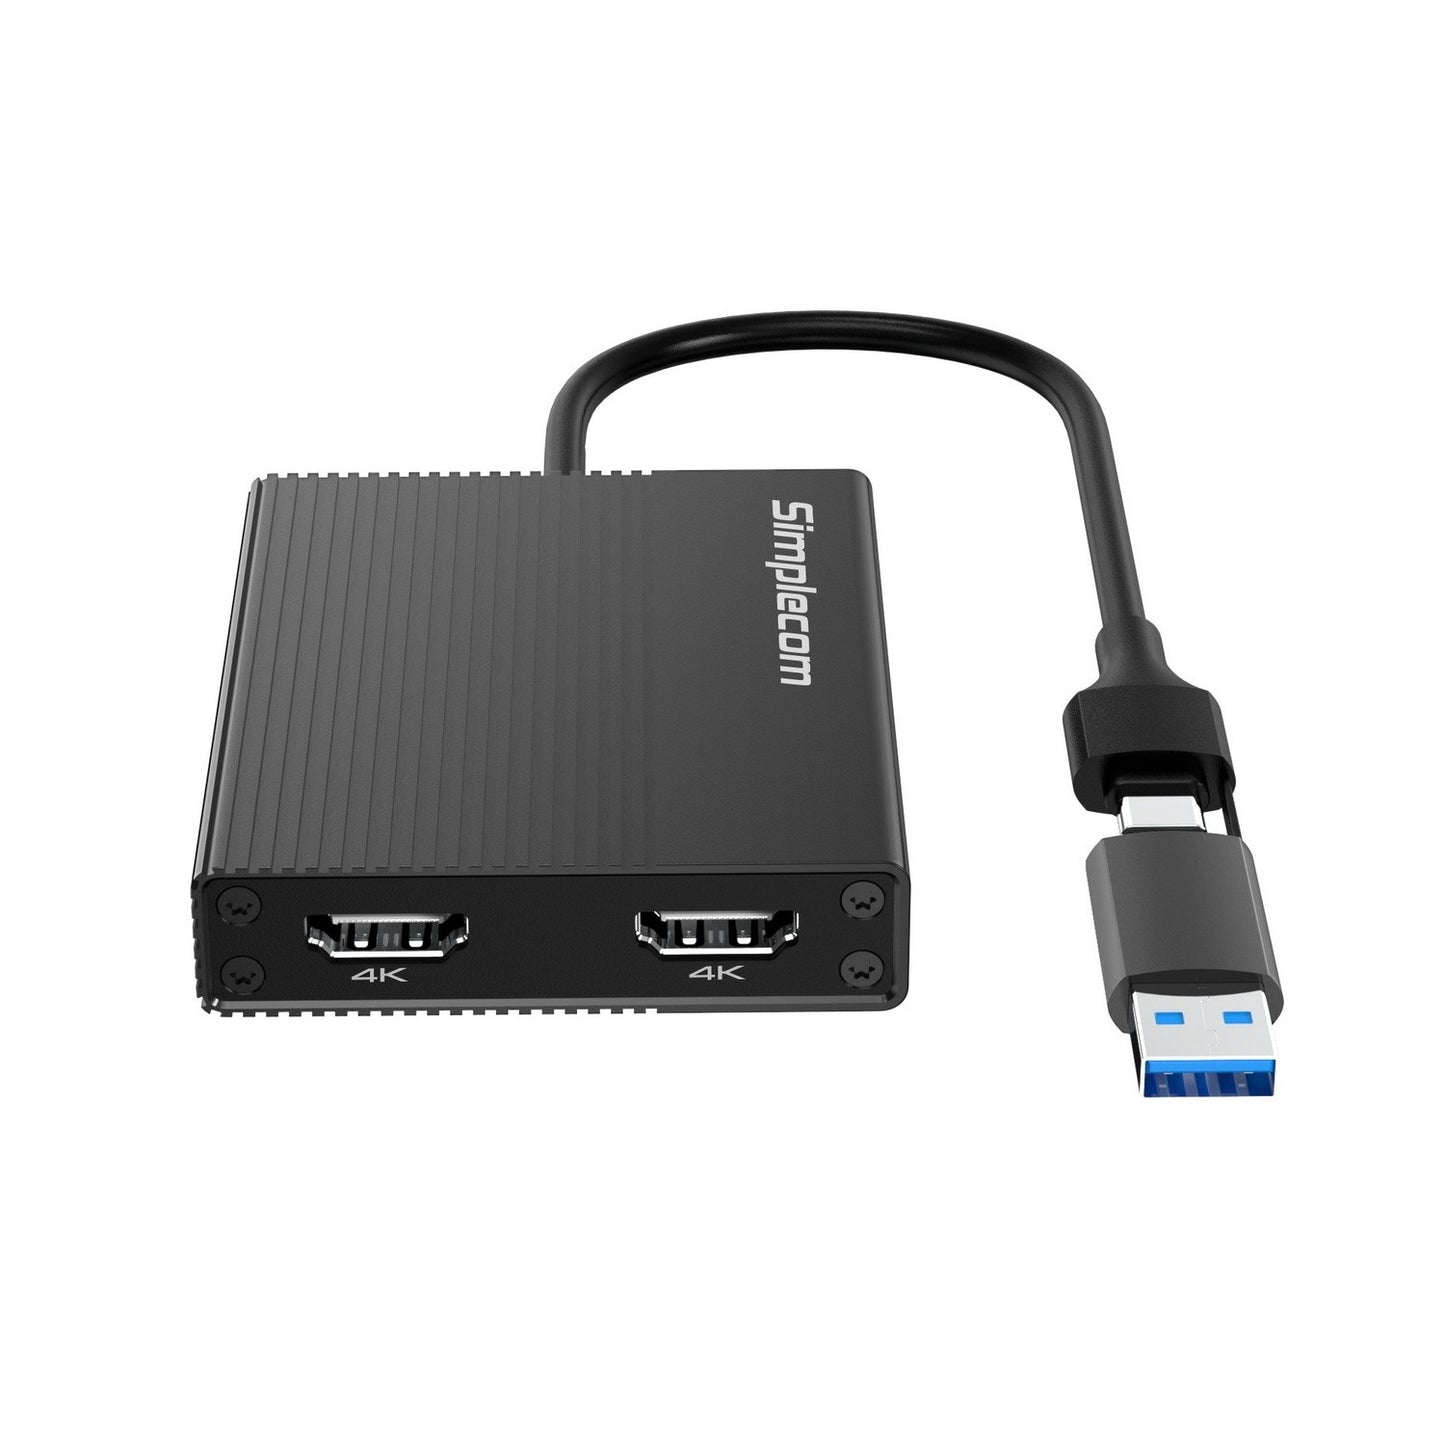 USB 3.0 或 USB-C 转双 4K HDMI 显示适配器